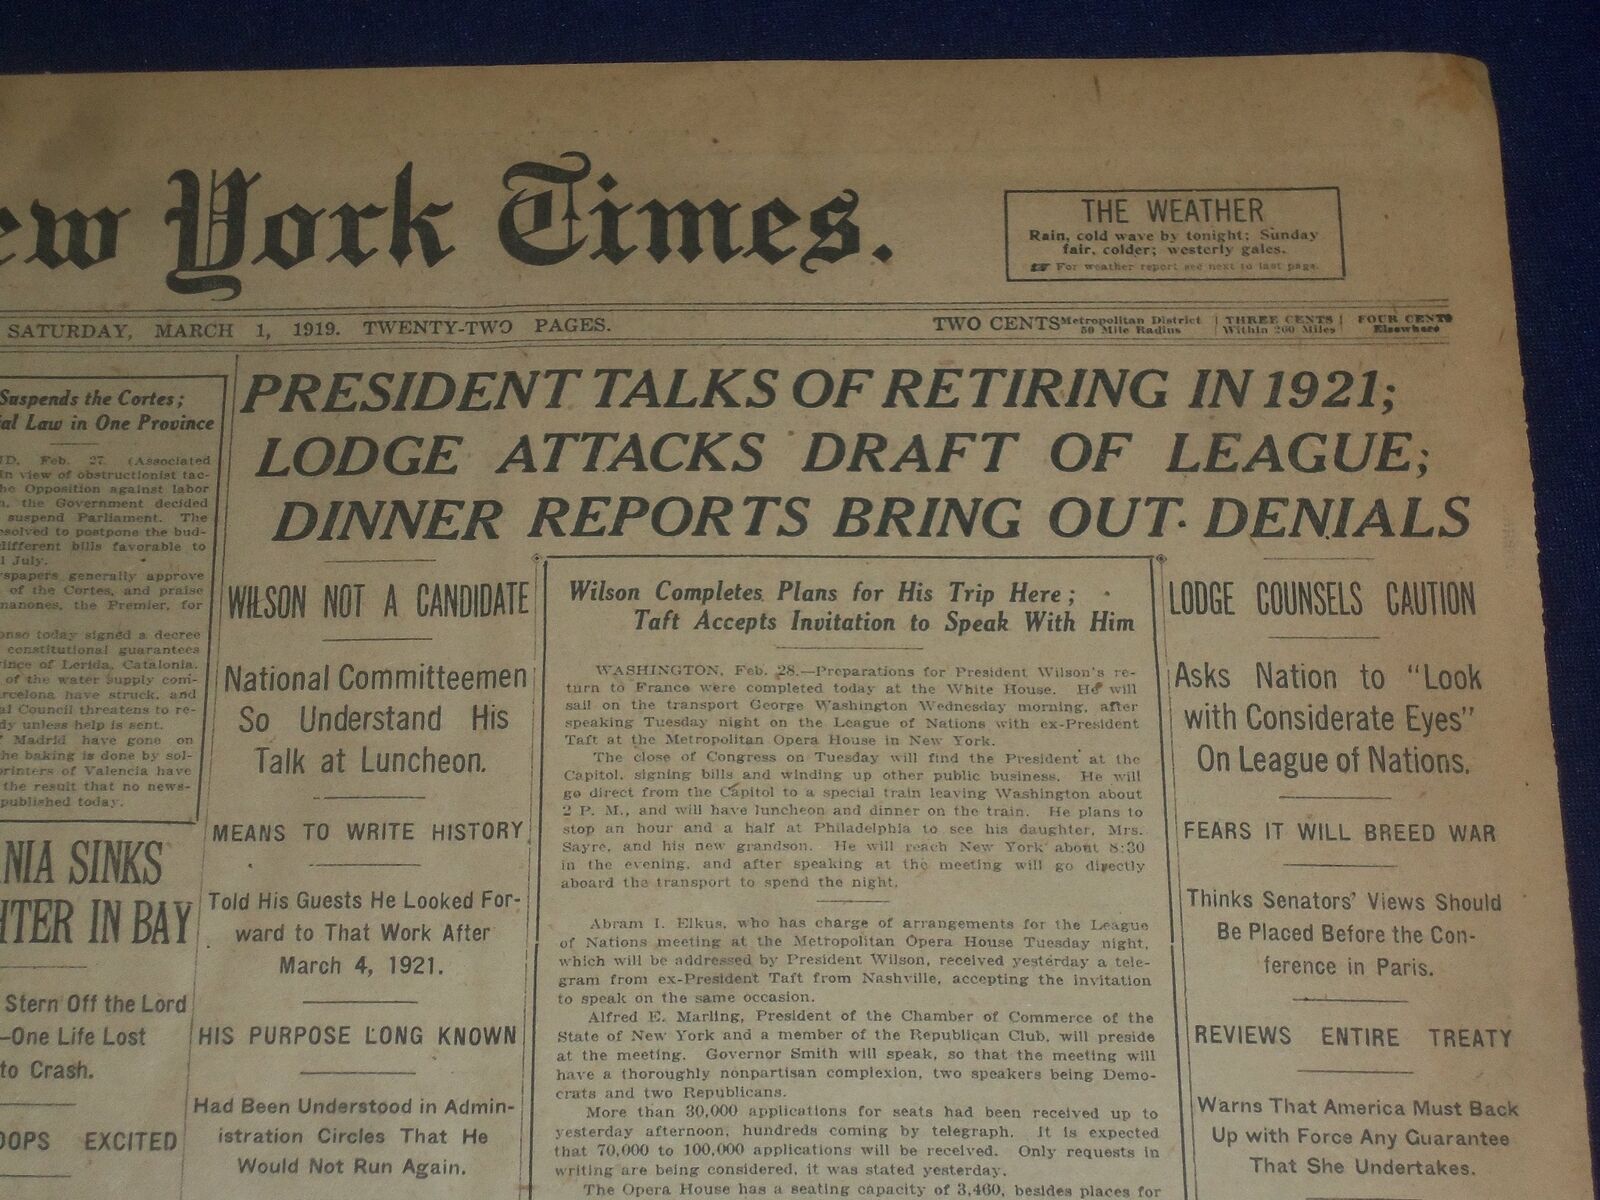 1919 MARCH 1 NEW YORK TIMES - PRESIDENT TALKS OF RETIRING IN 1921 - NT 9264